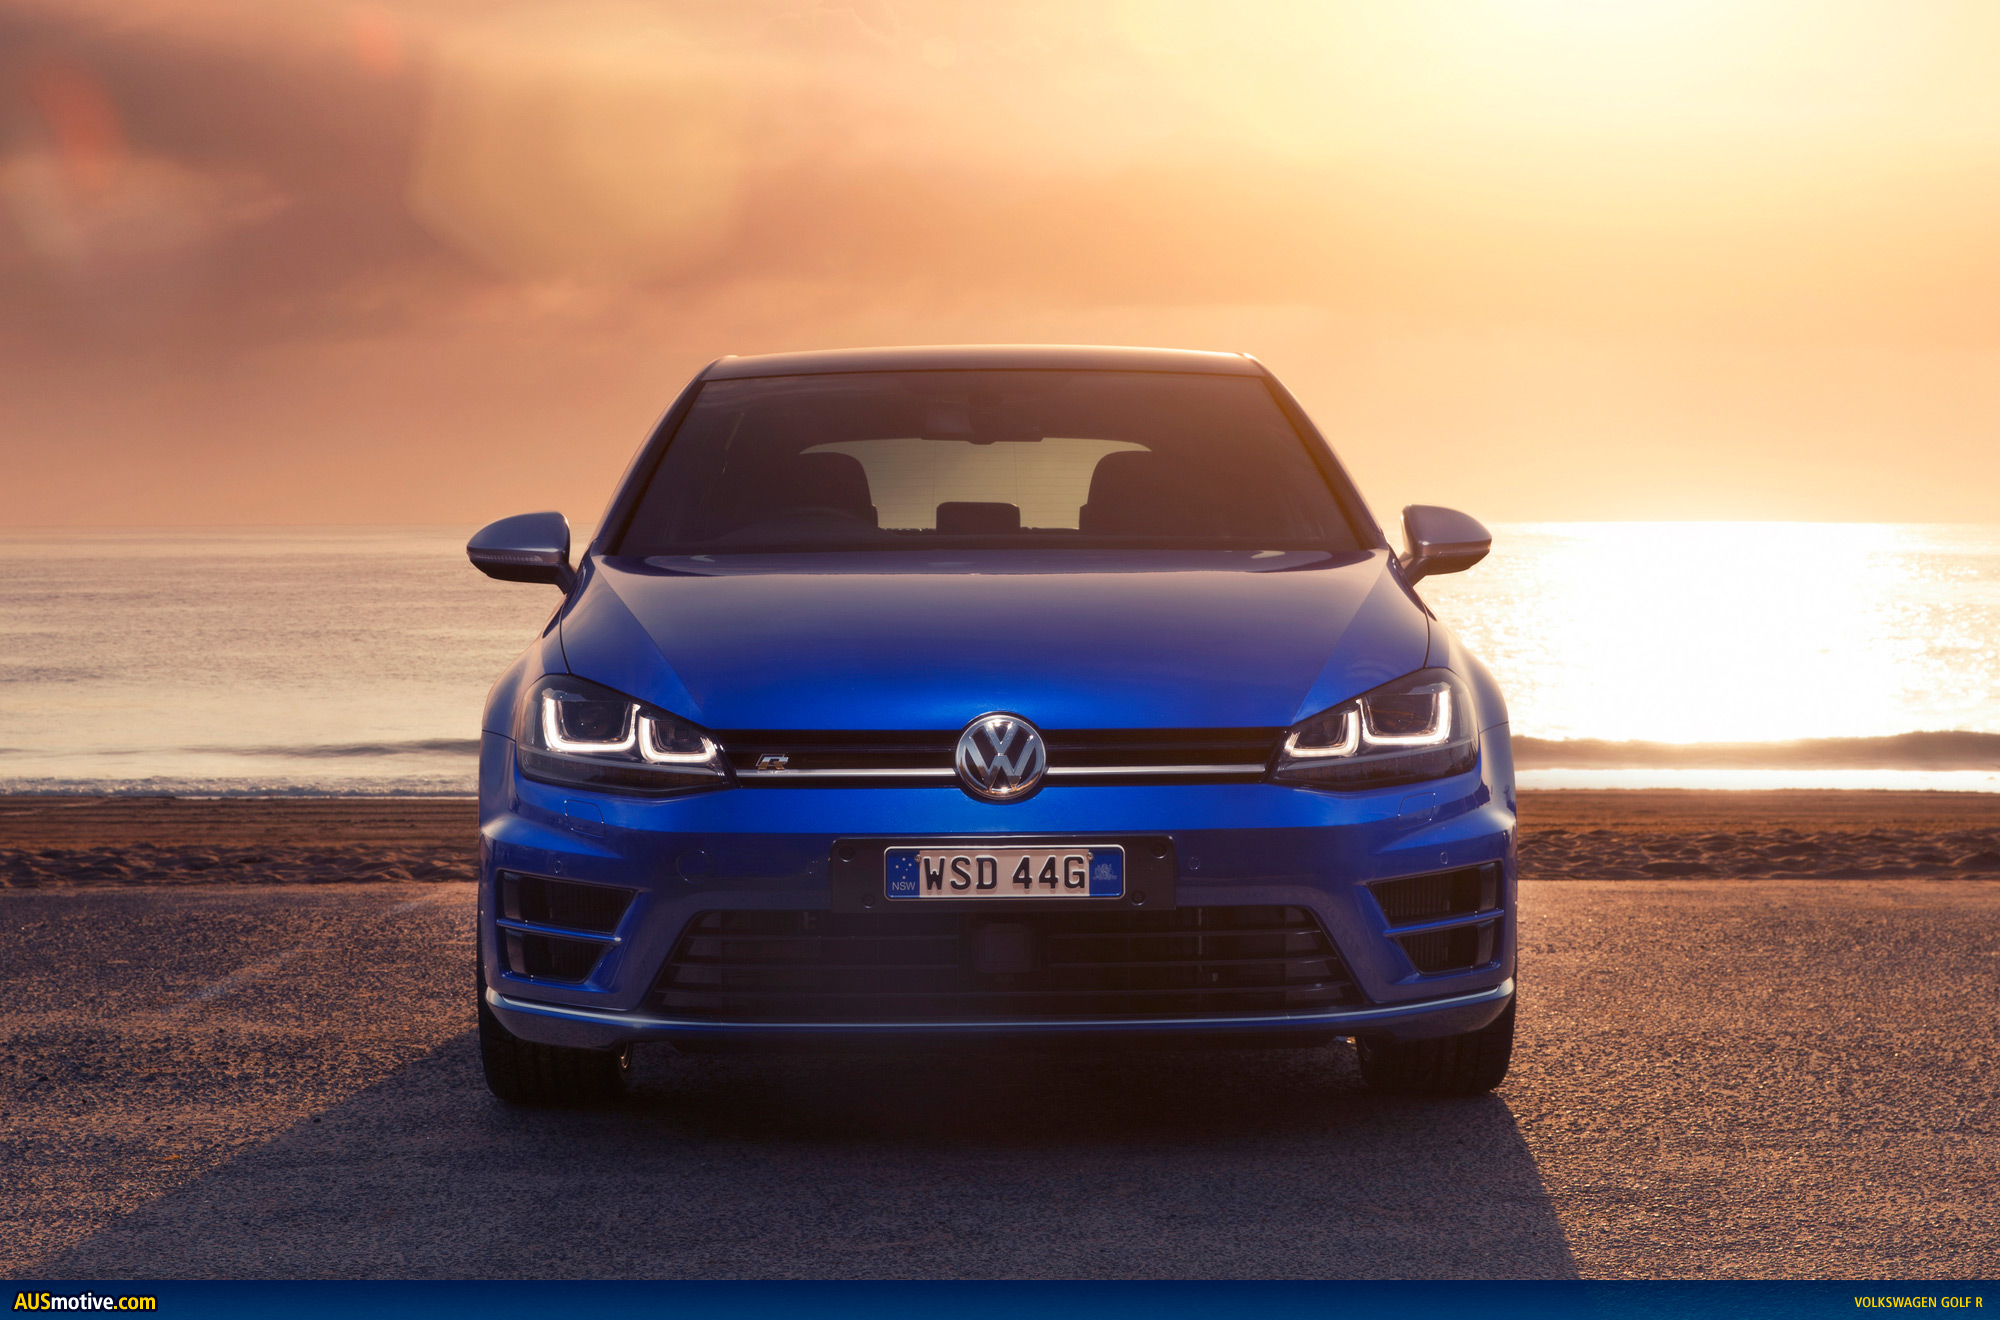  Volkswagen Golf R Photo Wallpaper Image Detail